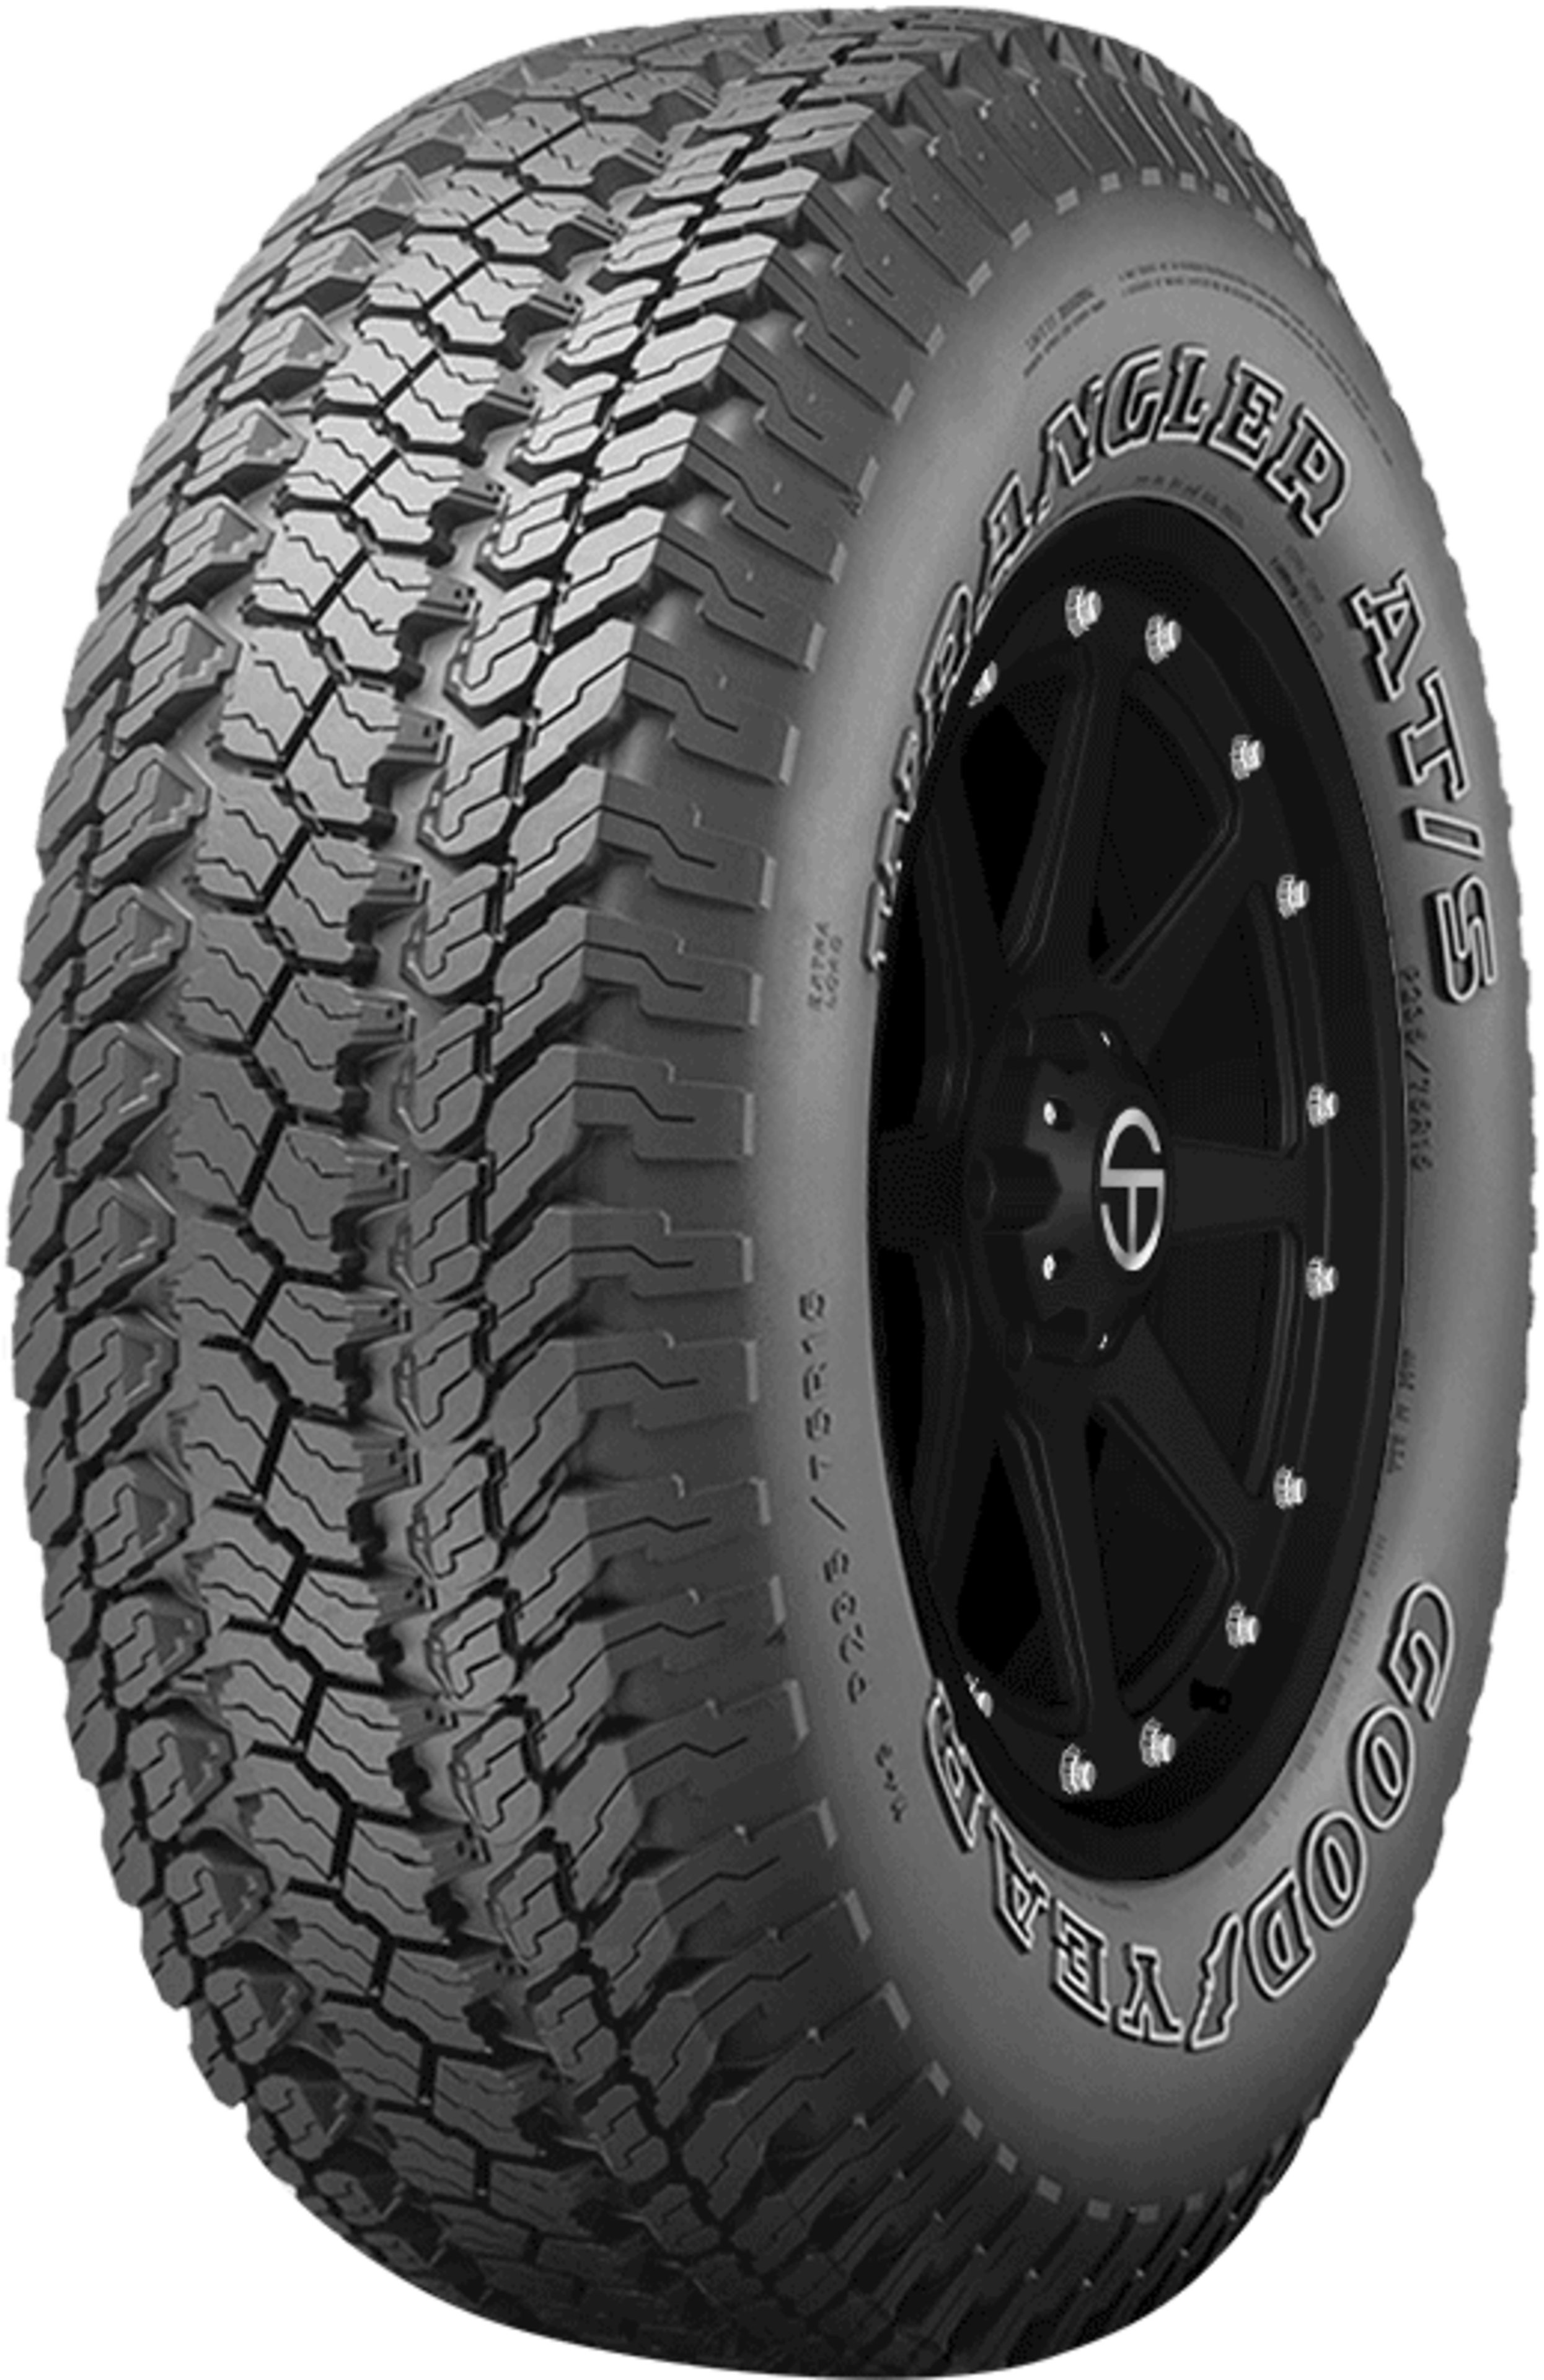 Buy Goodyear Wrangler Trailmark 265/70R17 Tires | SimpleTire